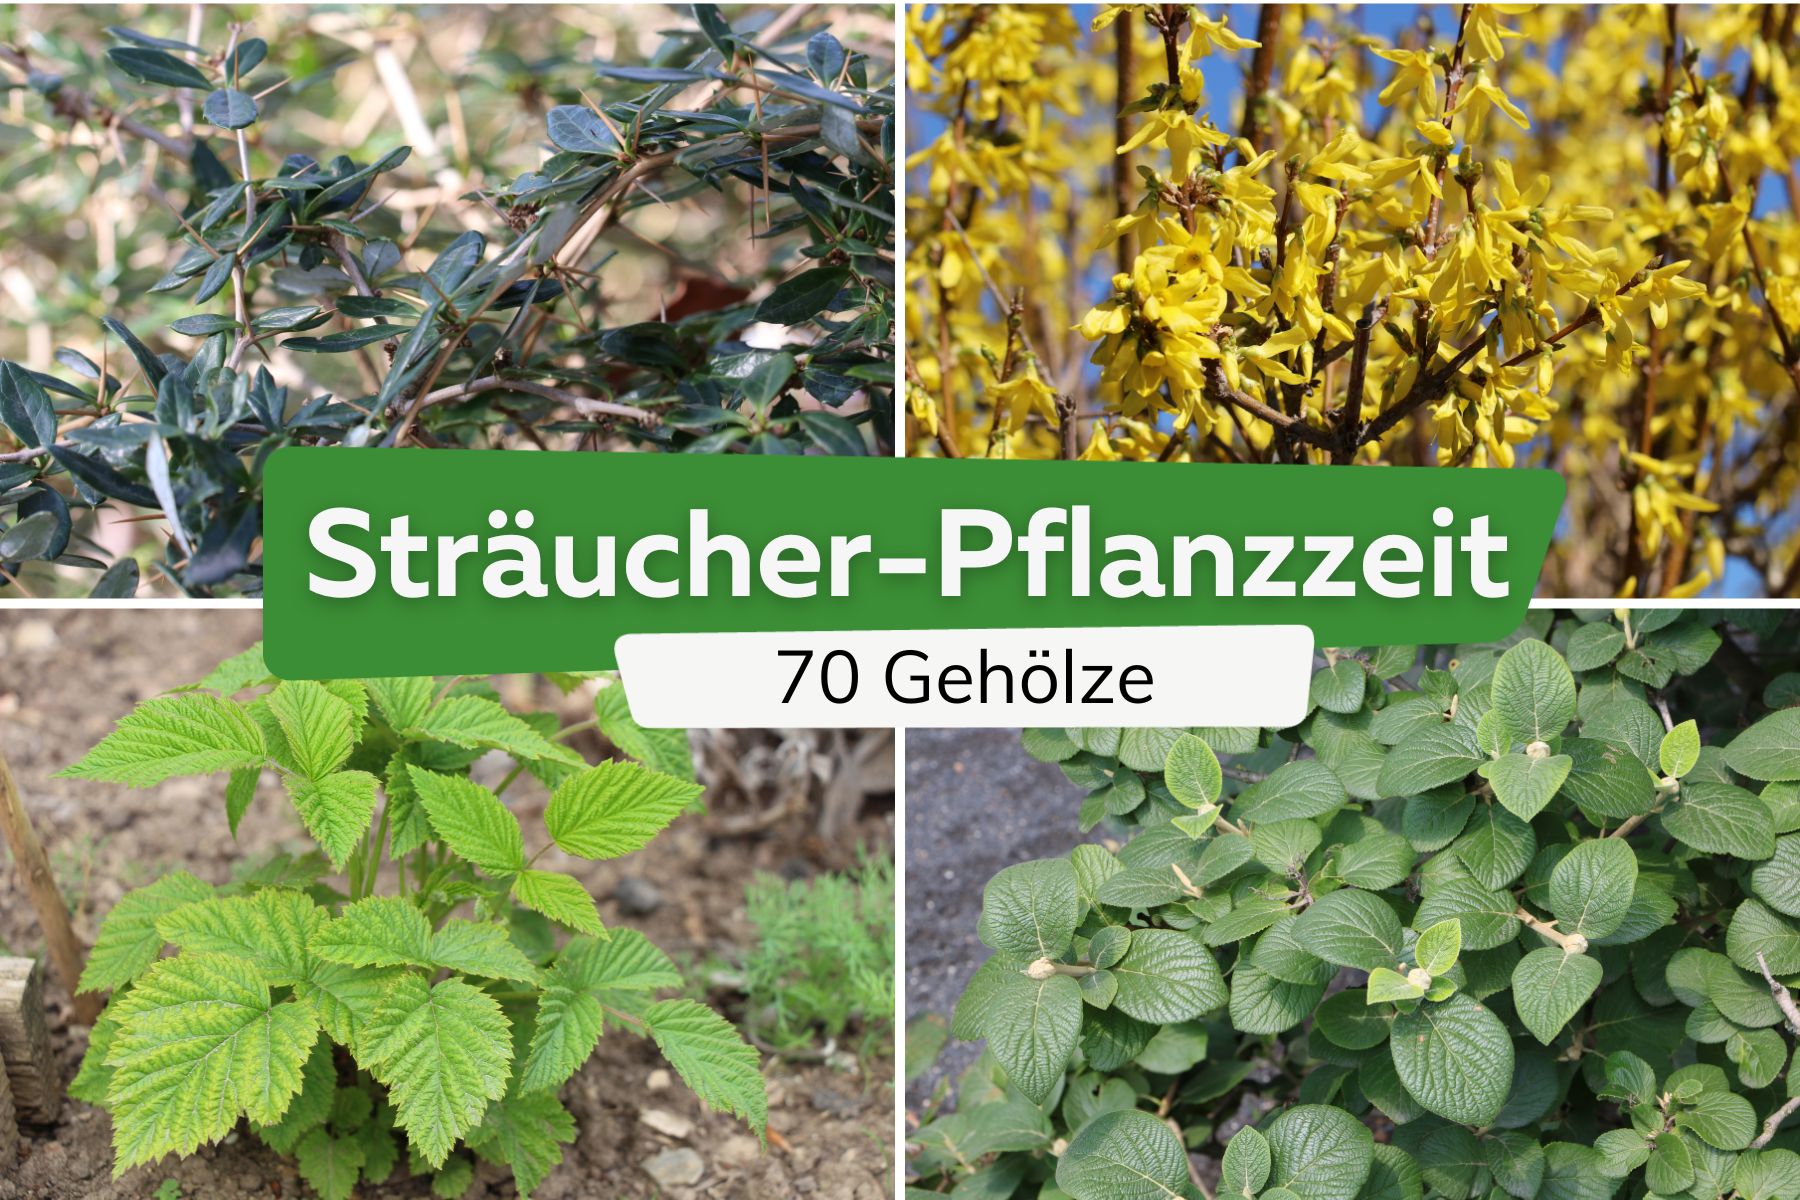 Berberitze, himbeere, Forsythie, Schneeball (Viburnum schensianum)